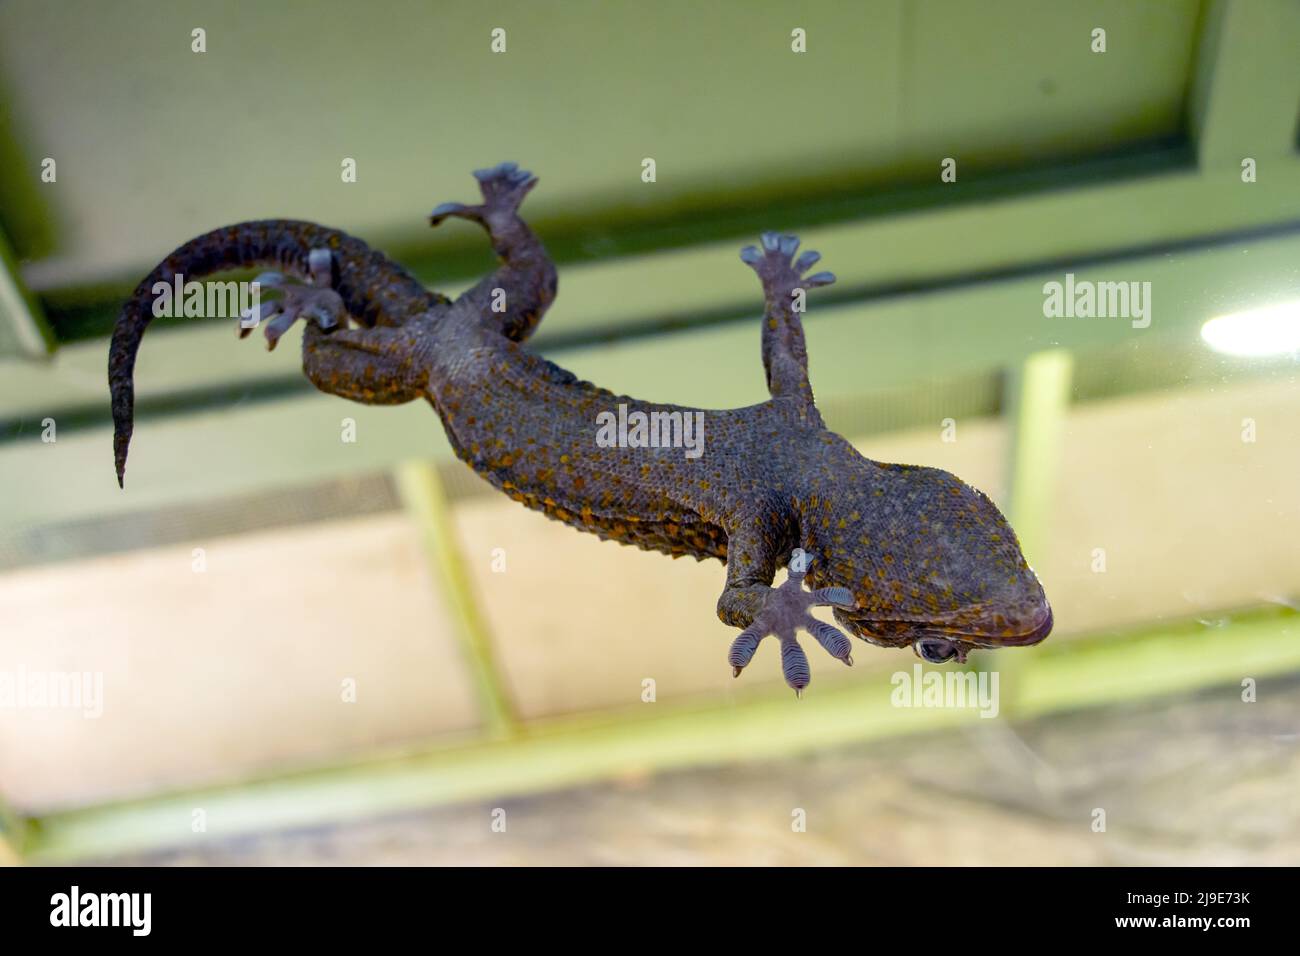 Turquoise Dwarf Gecko - Lygodactylus williamsi climb on a glass side of vivarium Stock Photo